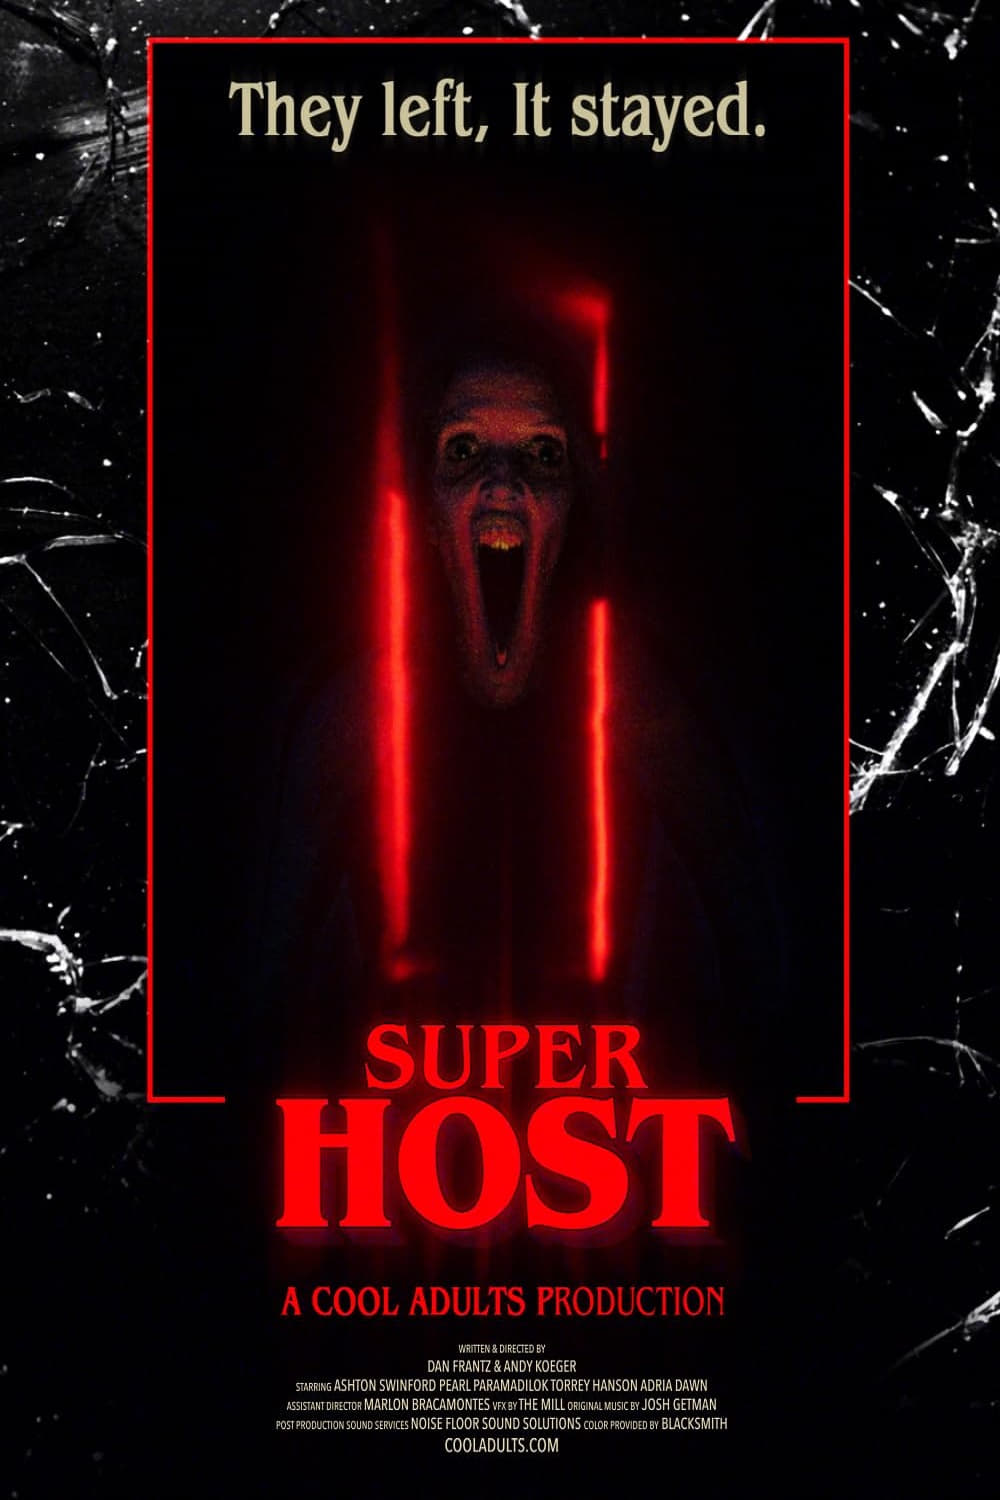 Super Host